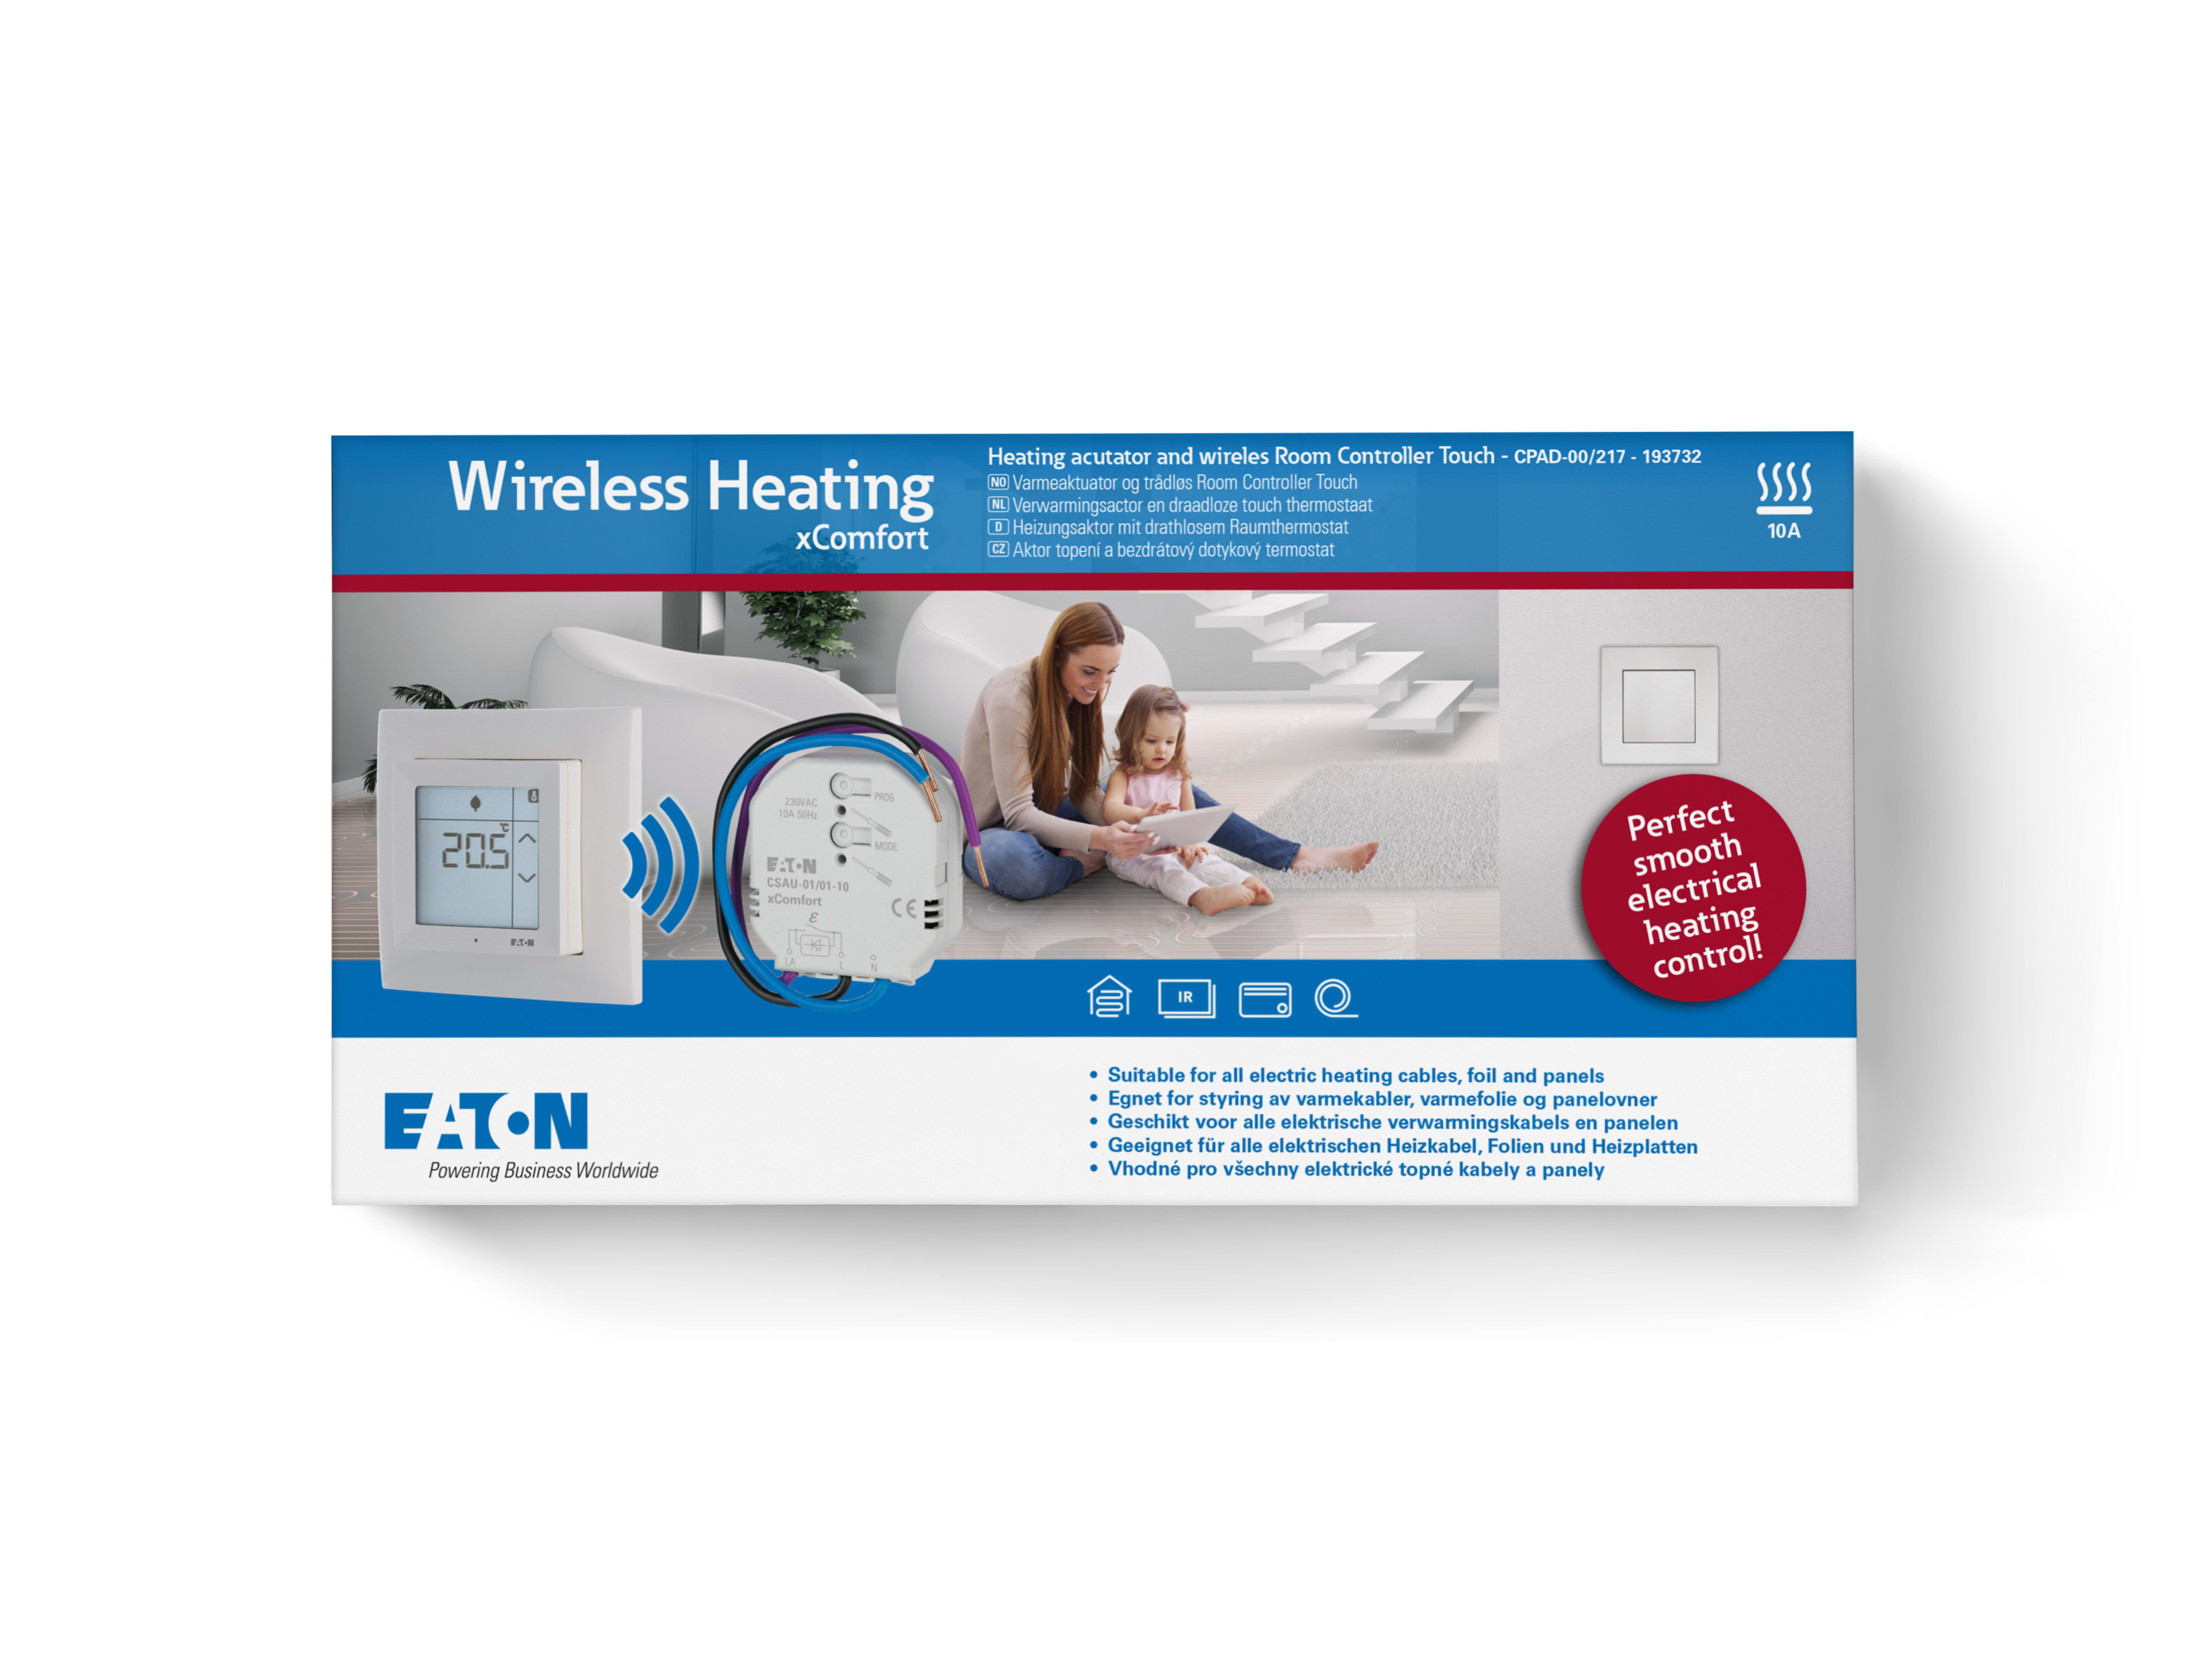 Eaton Electric - Wireless Heating CPAD-00/217